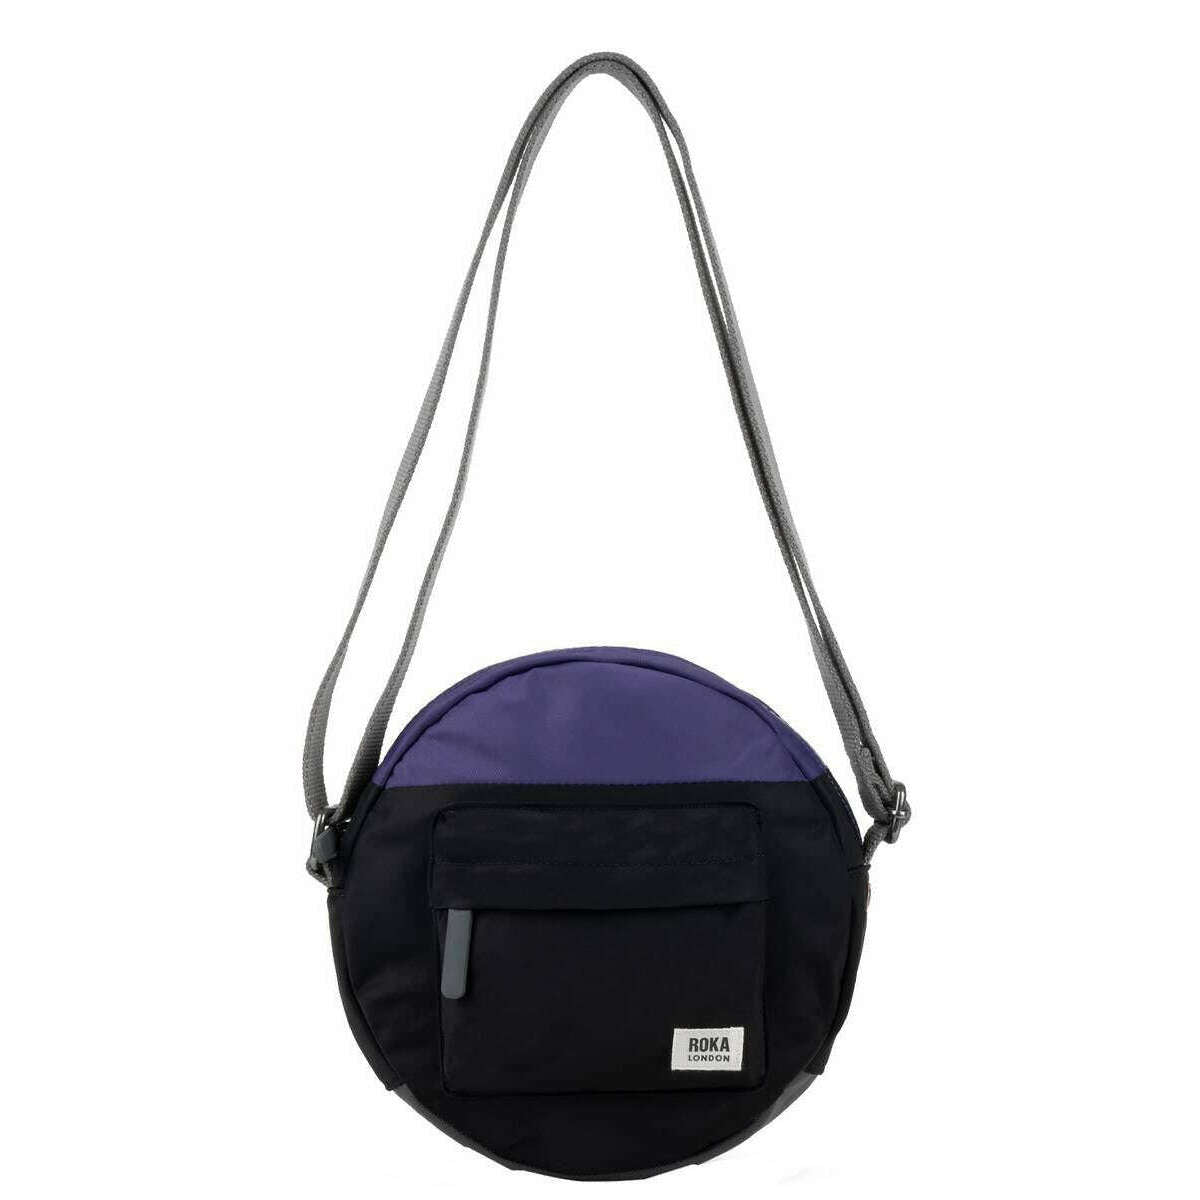 Roka Paddington B Creative Waste Two Tone Recycled Nylon Crossbody Bag - Black/Mulberry Purple